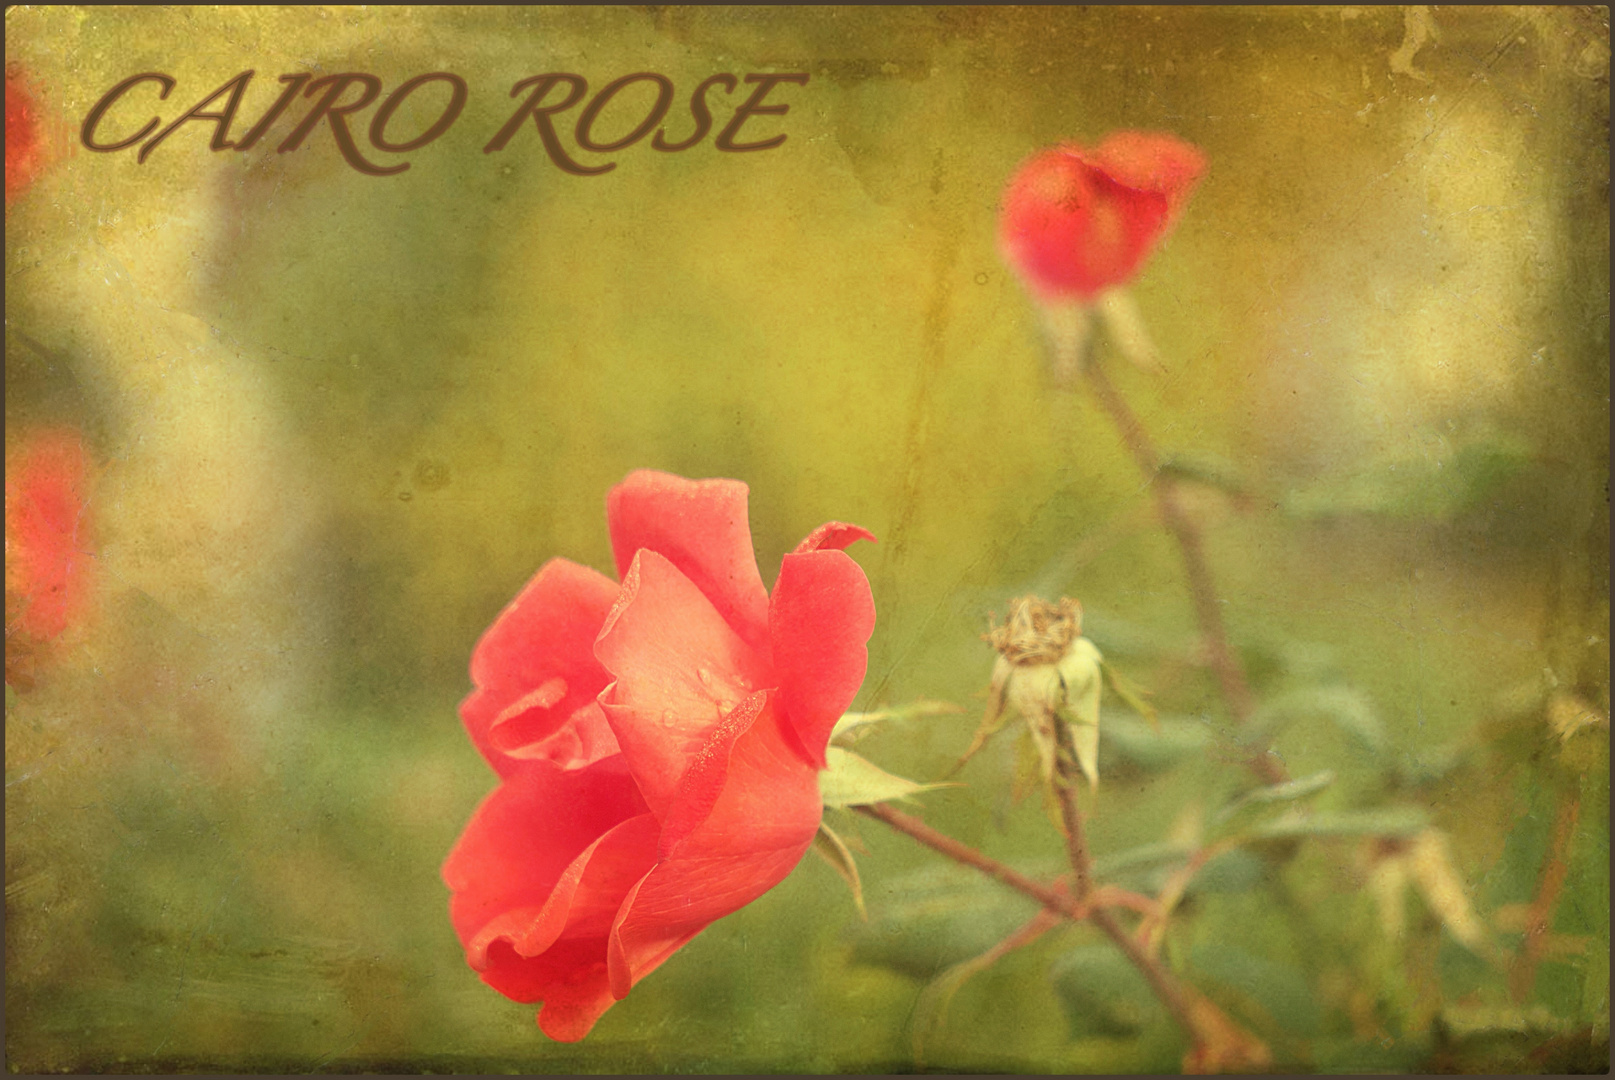 Cairo Rose